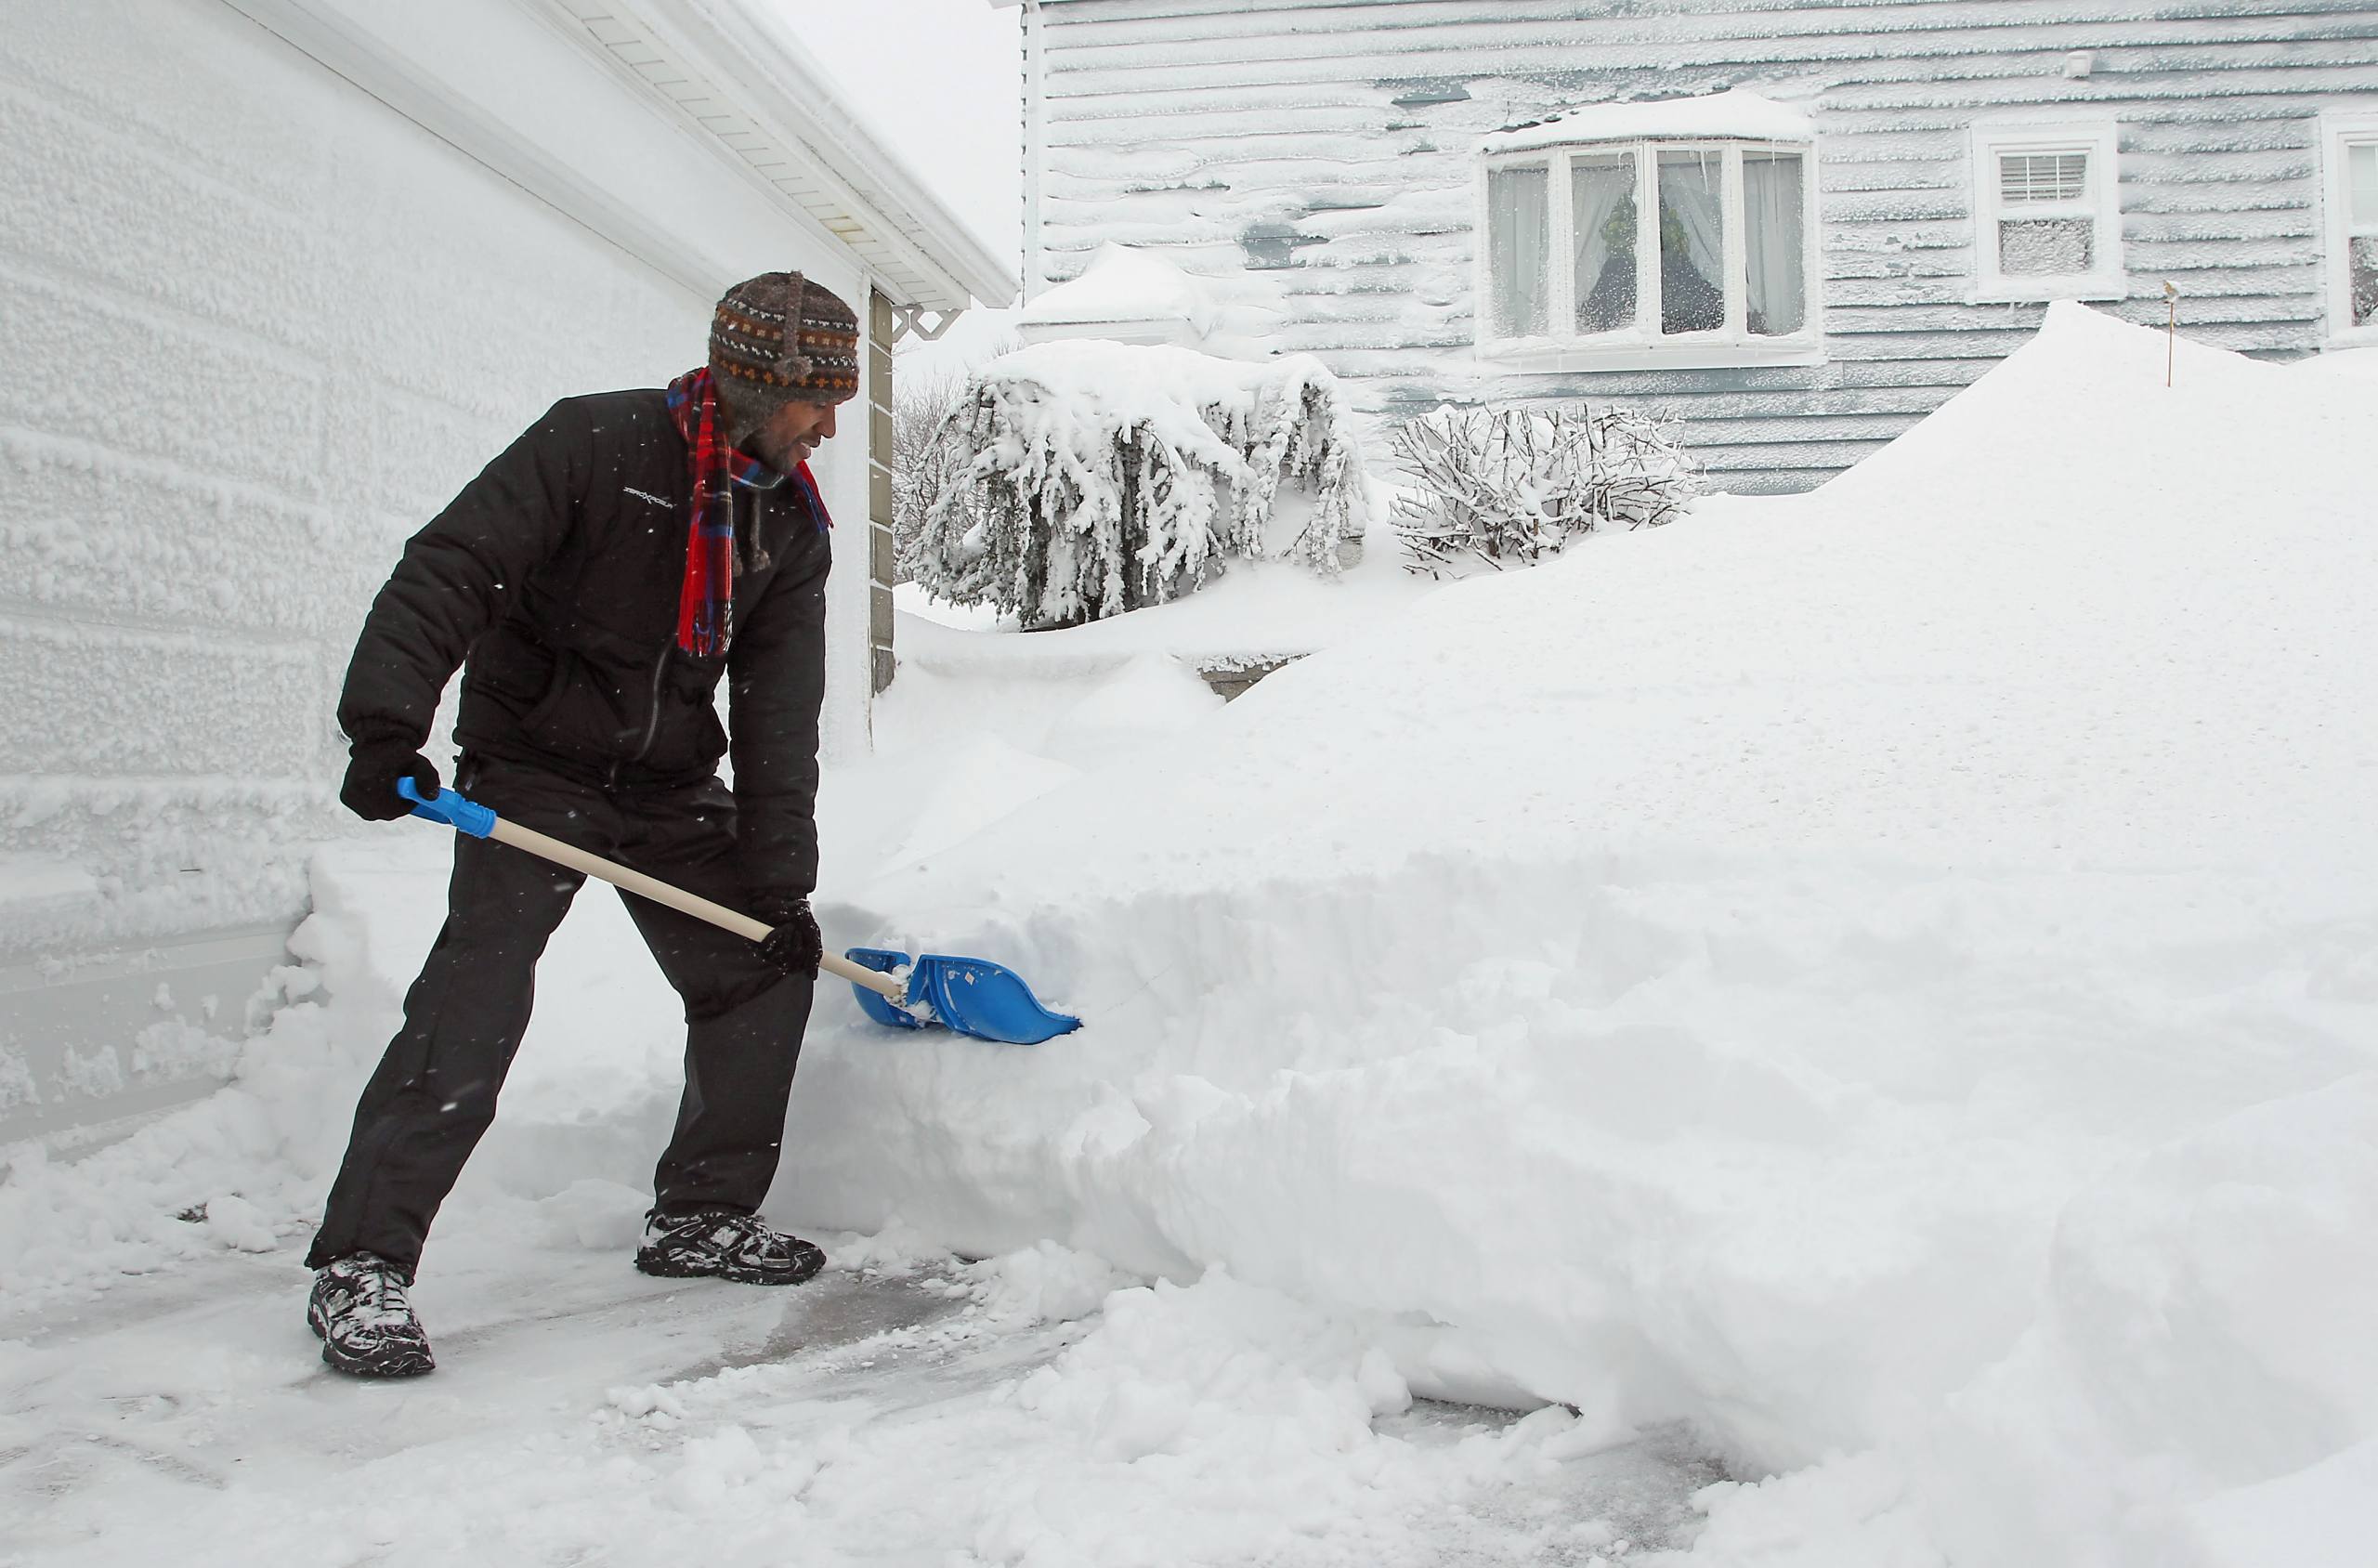 DuPont Teflon Snow & Ice Repellant for Snowblowers & Shovels 